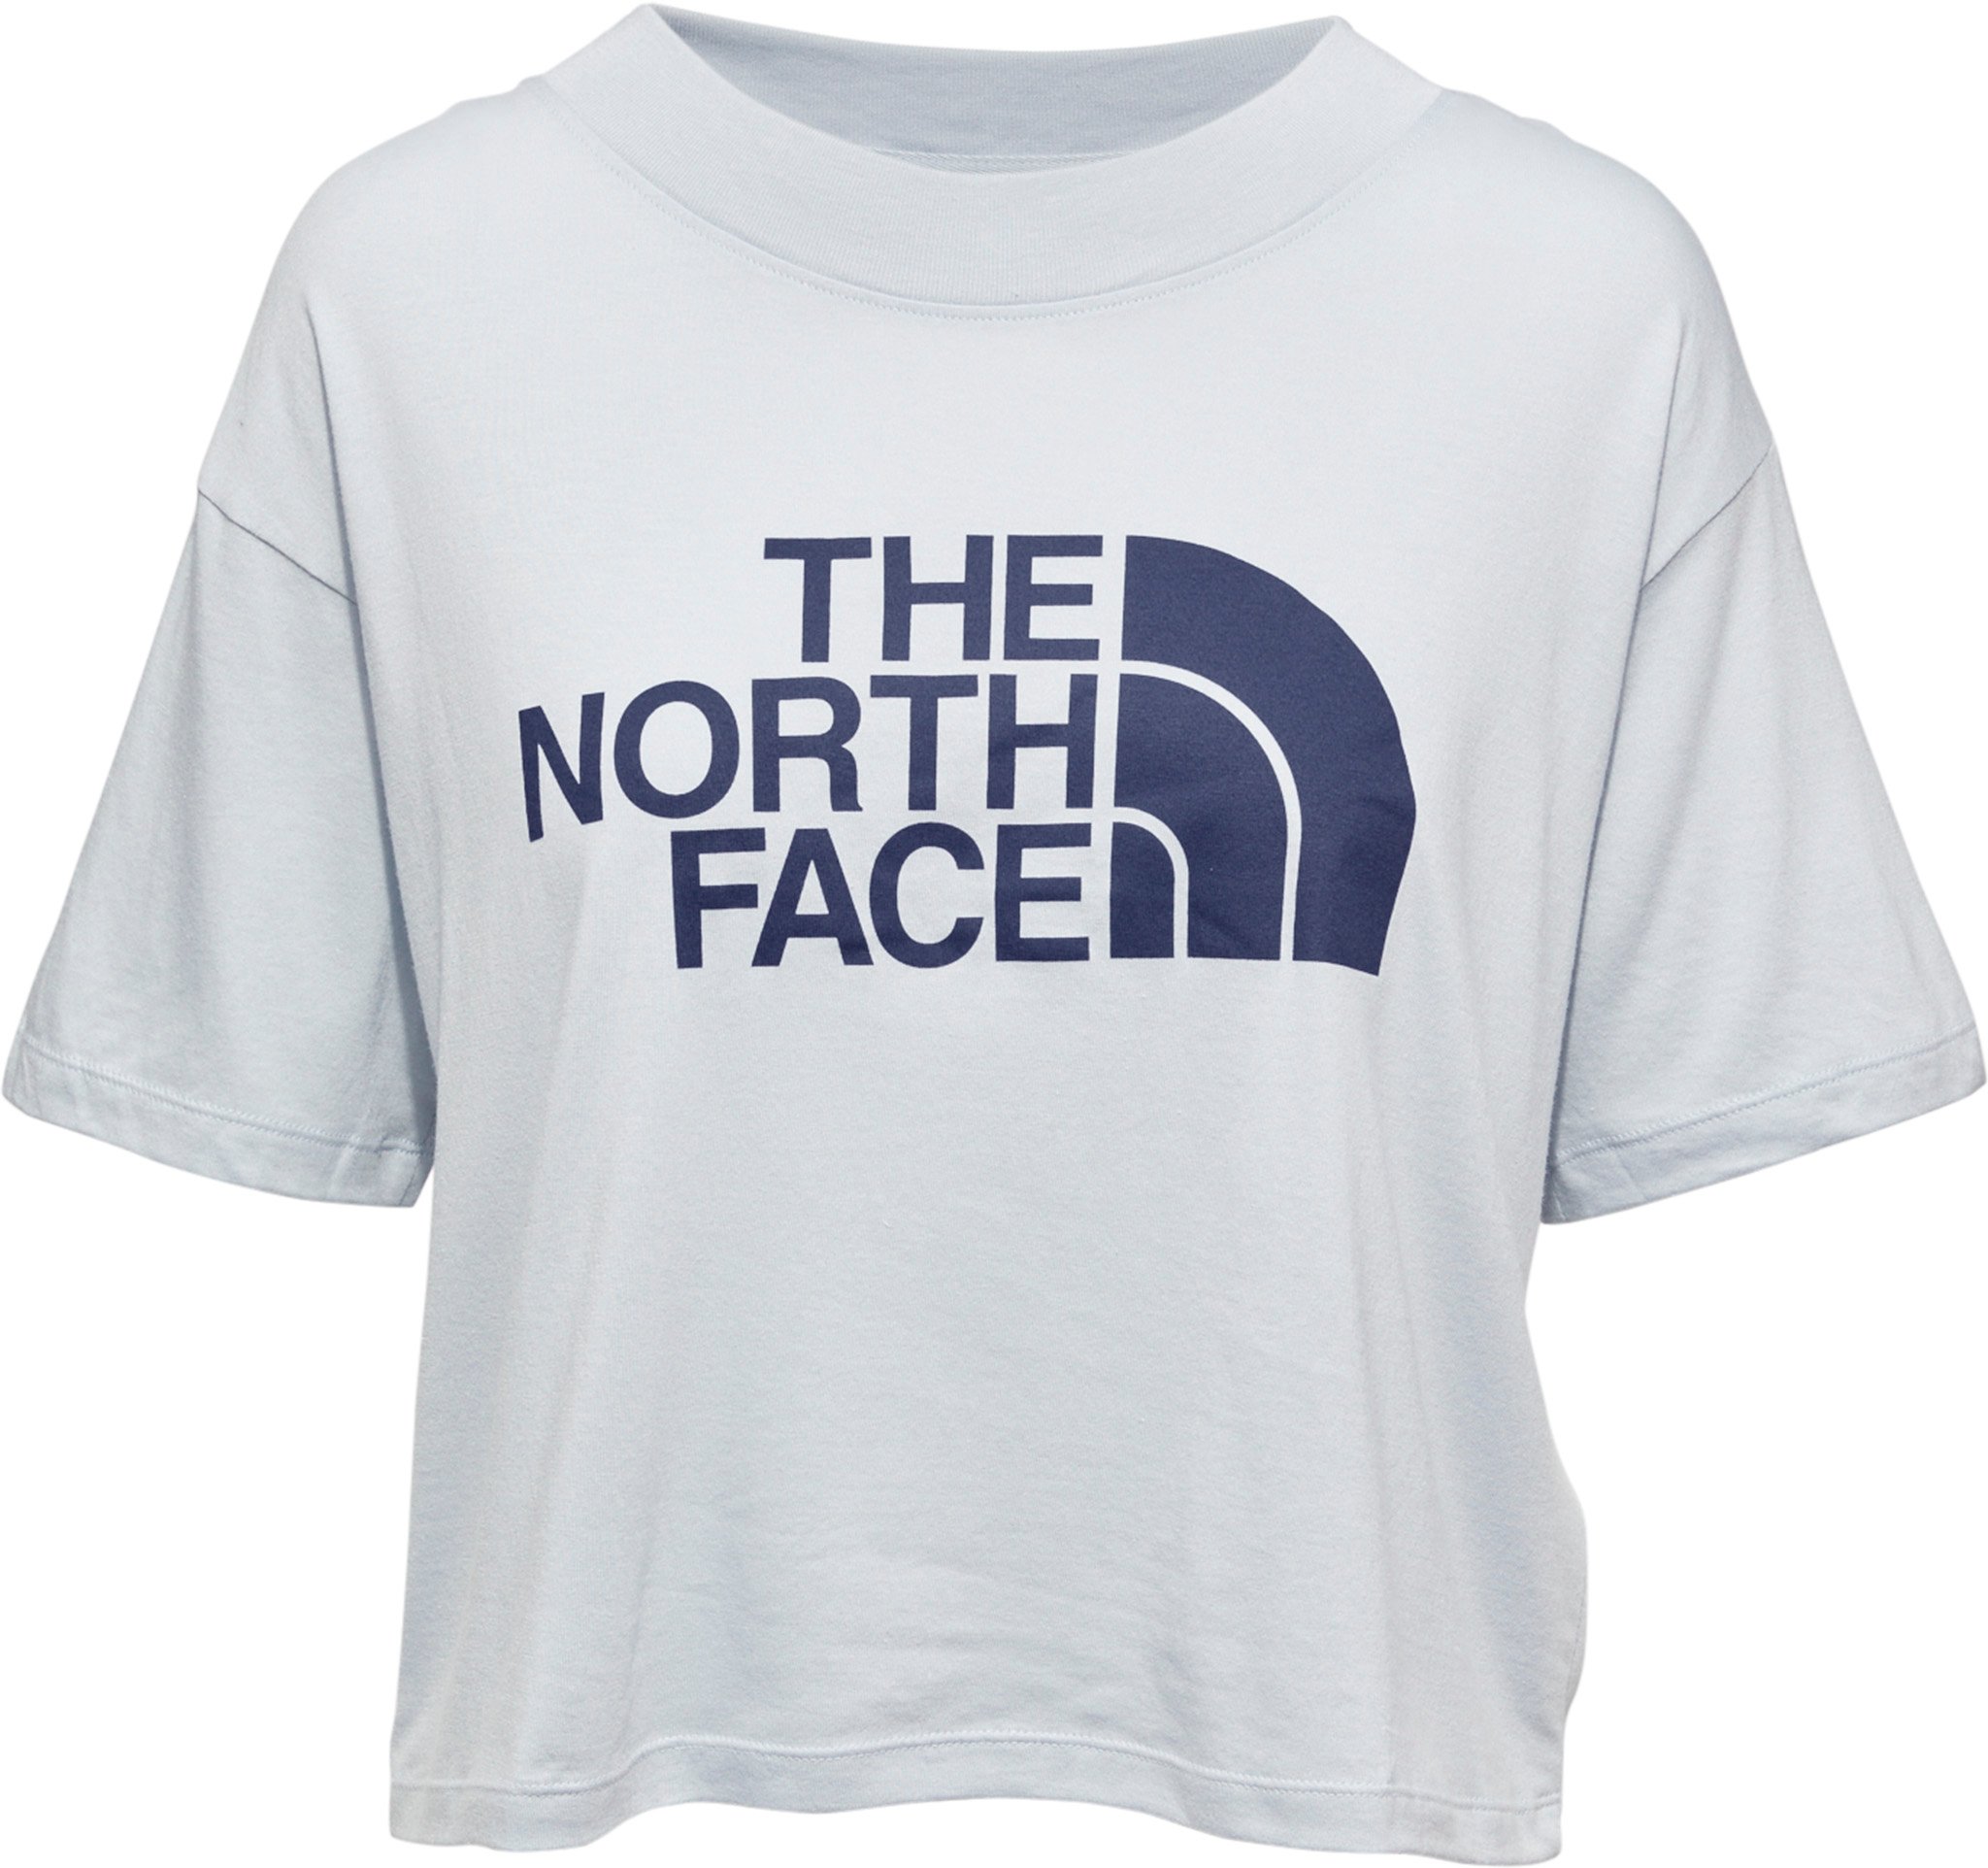 The North Face Half Dome Short-Sleeve T-Shirt - Men's Skylight Blue, M